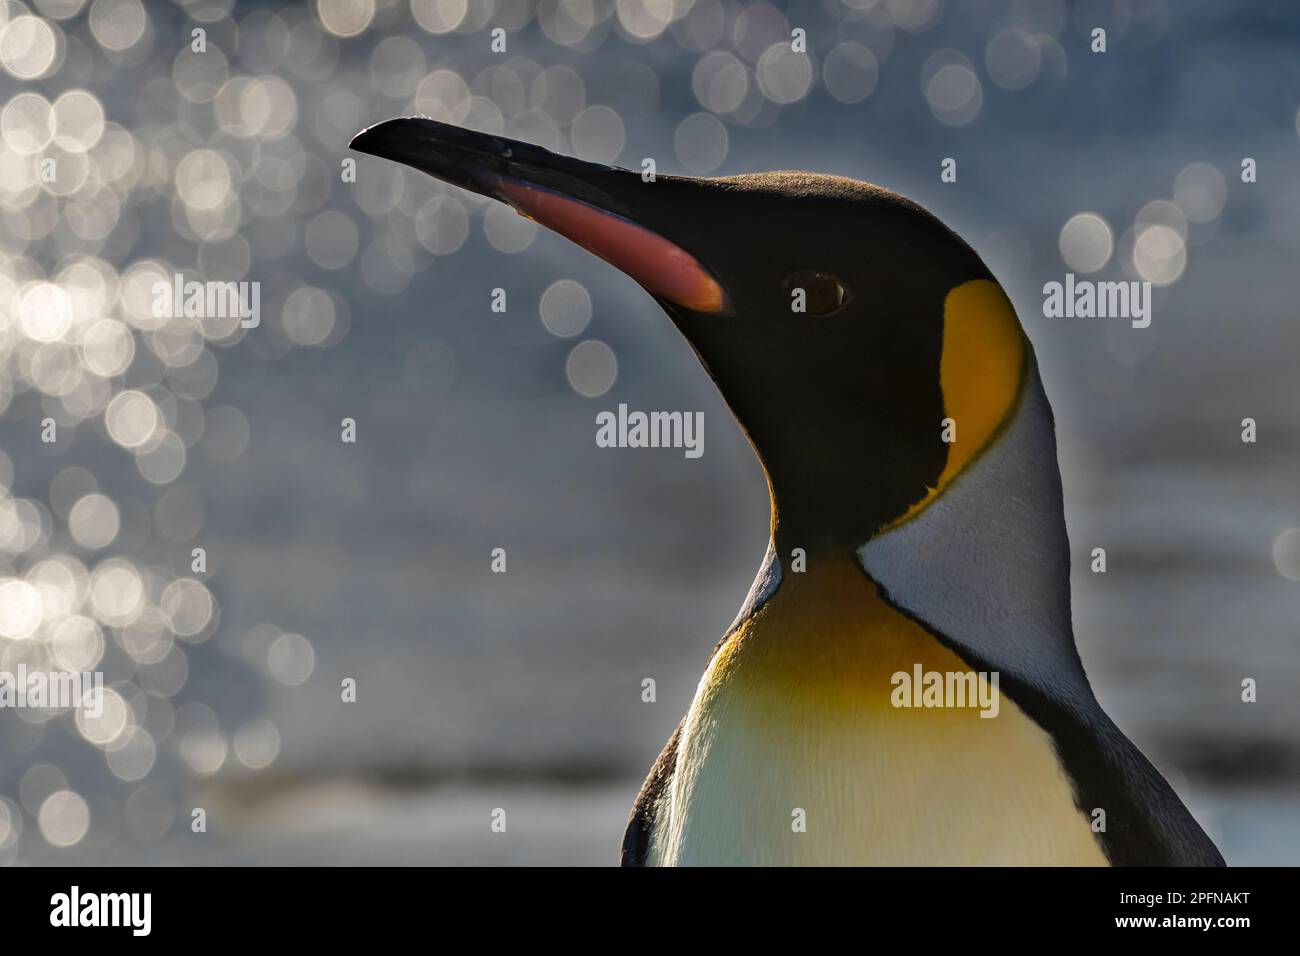 Géorgie du Sud, baie de Fortuna. Grand pingouin (Aptenodytes patagonicus) Banque D'Images